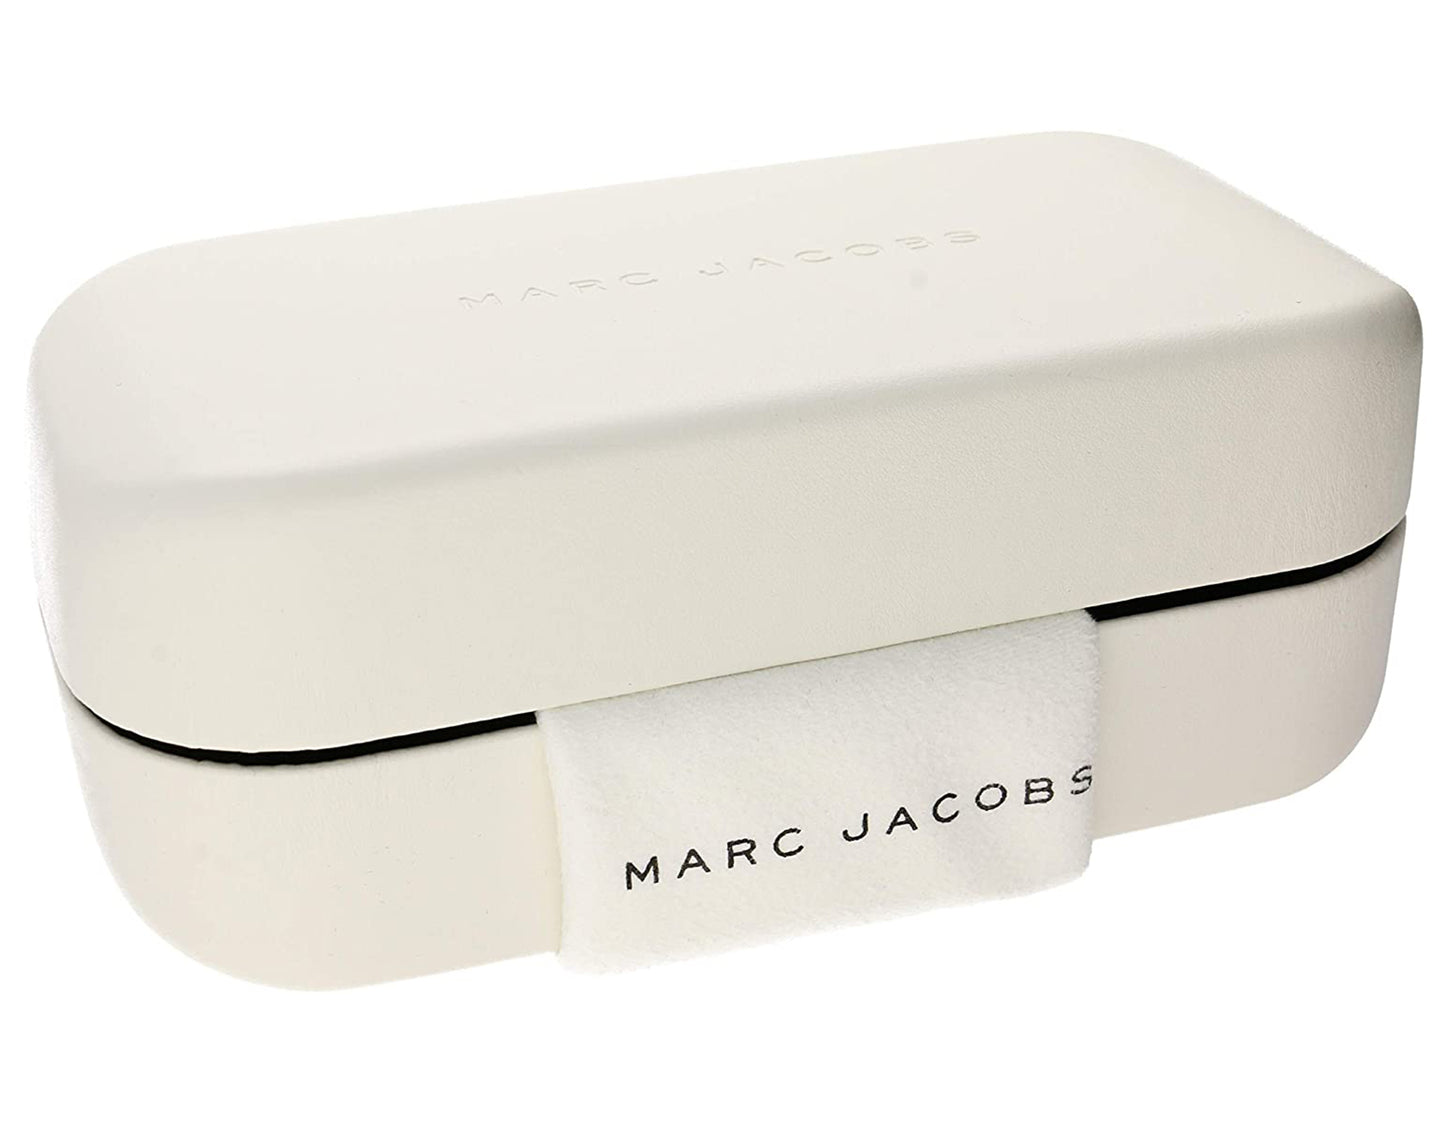 Marc Jacobs MJ 1078/S-0807 9O 52mm New Sunglasses